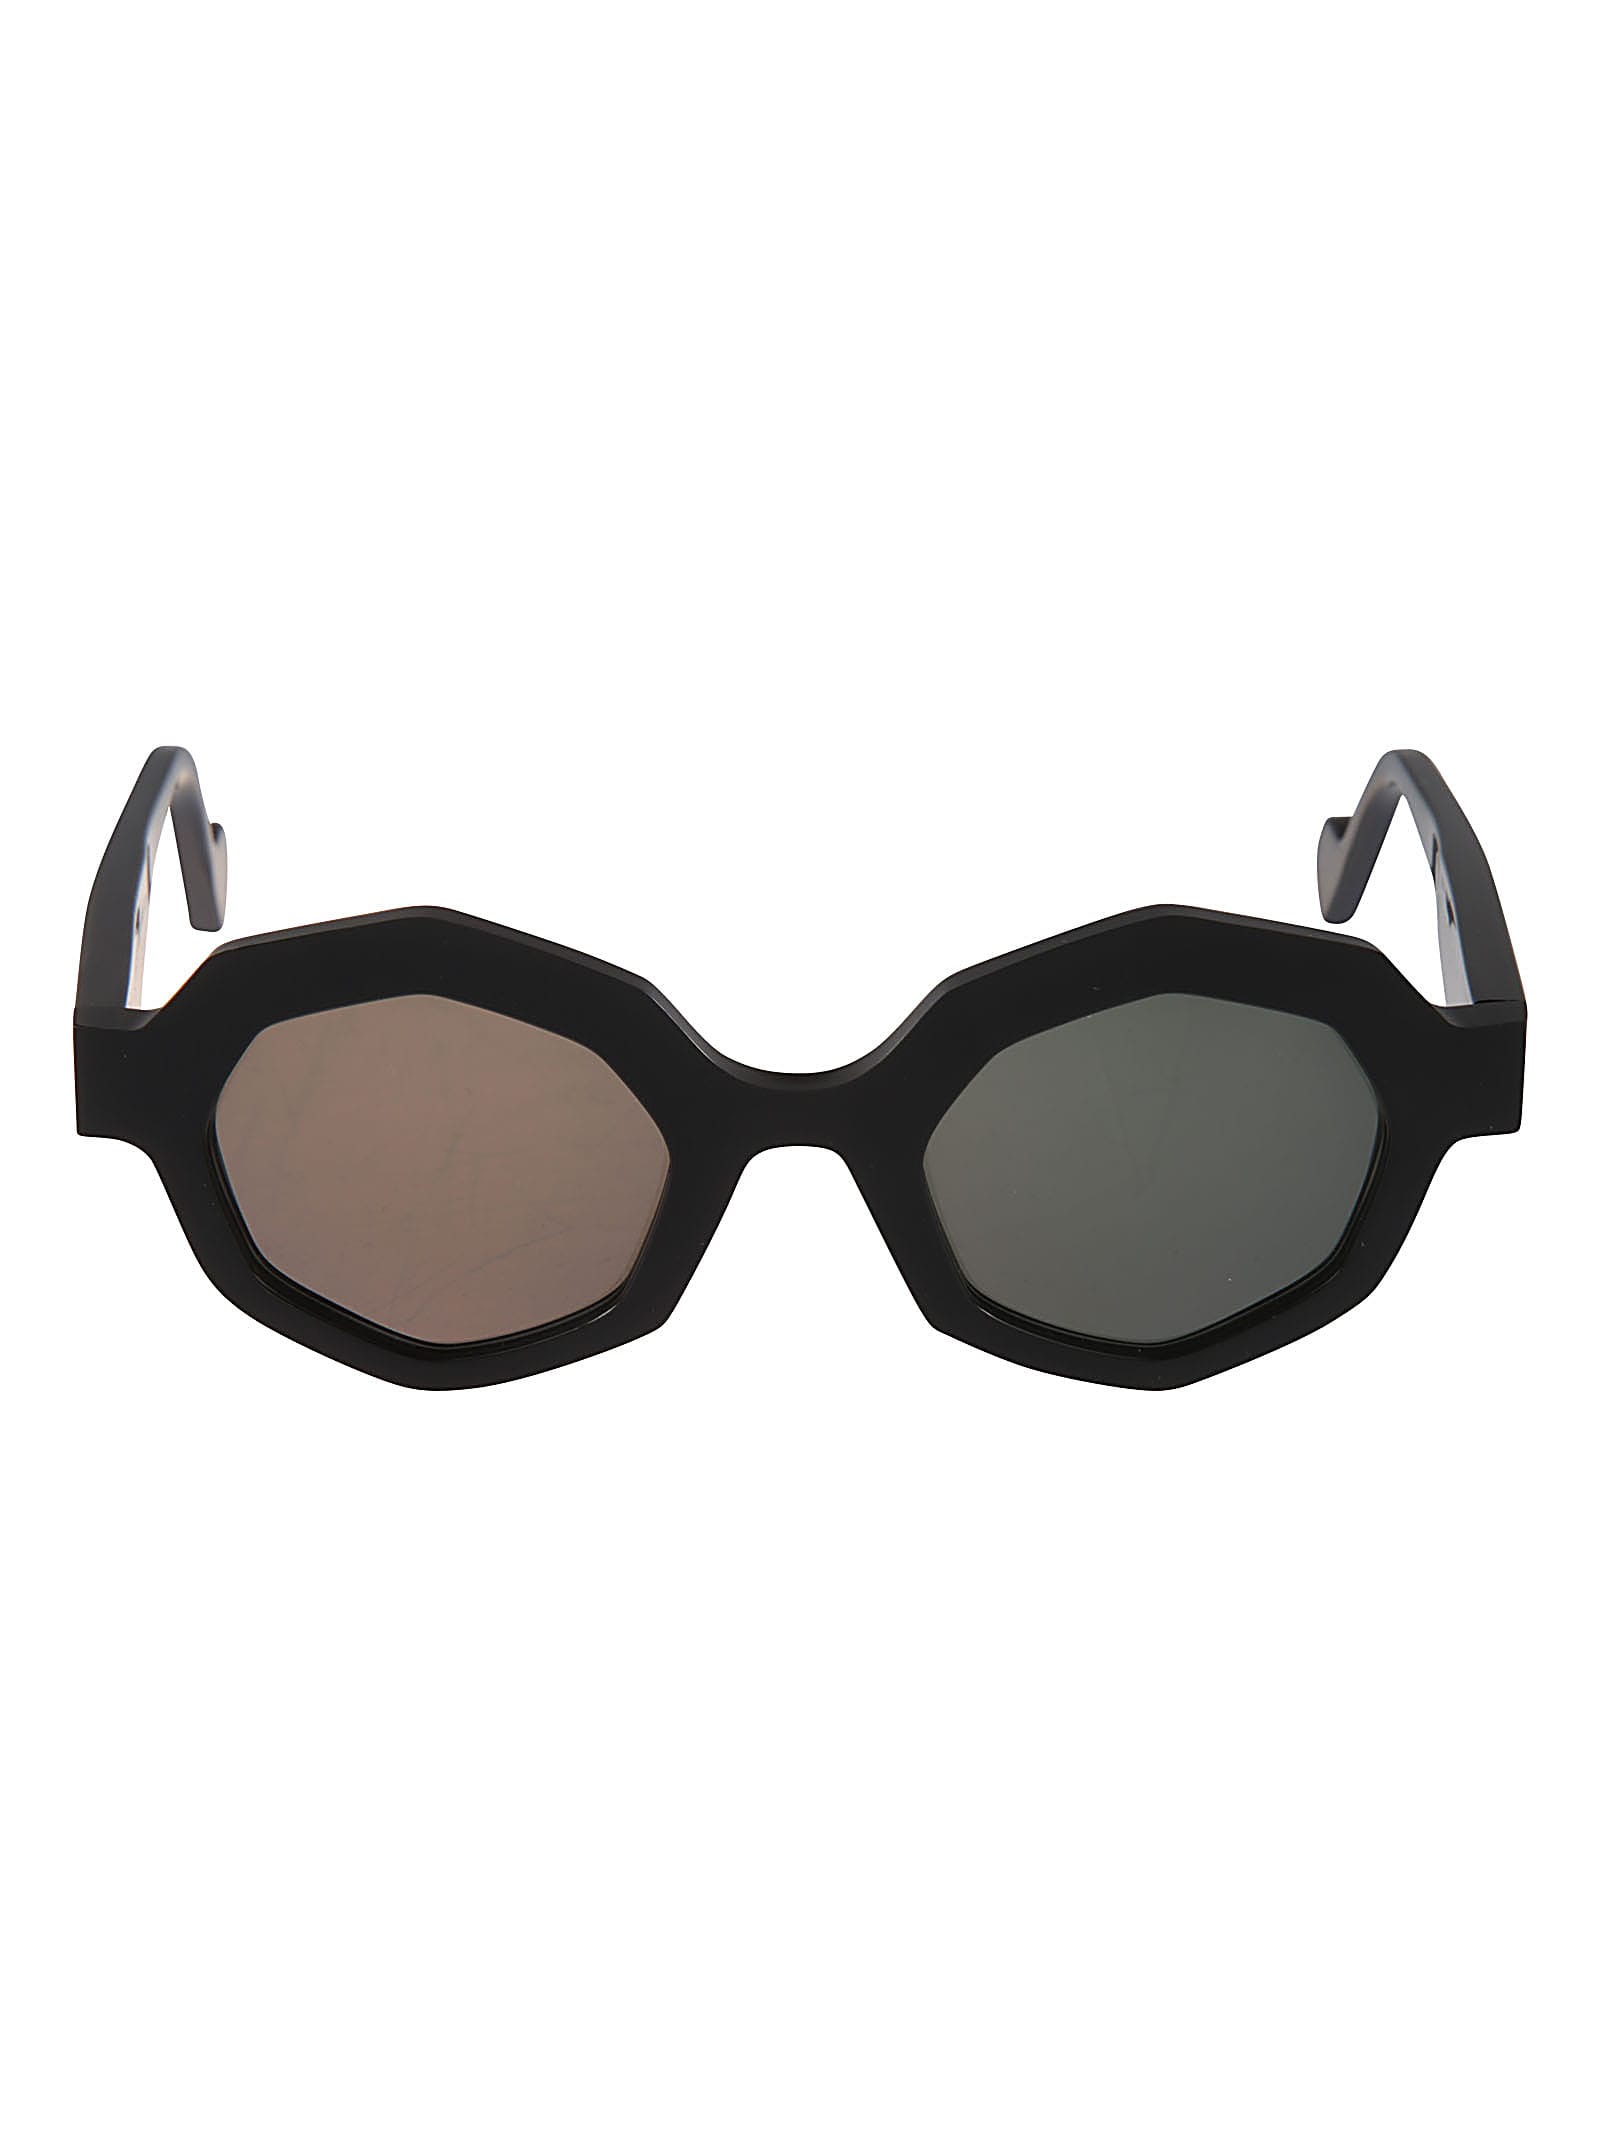 Anne & Valentin Swinton Octagon Frame Sunglasses In Black